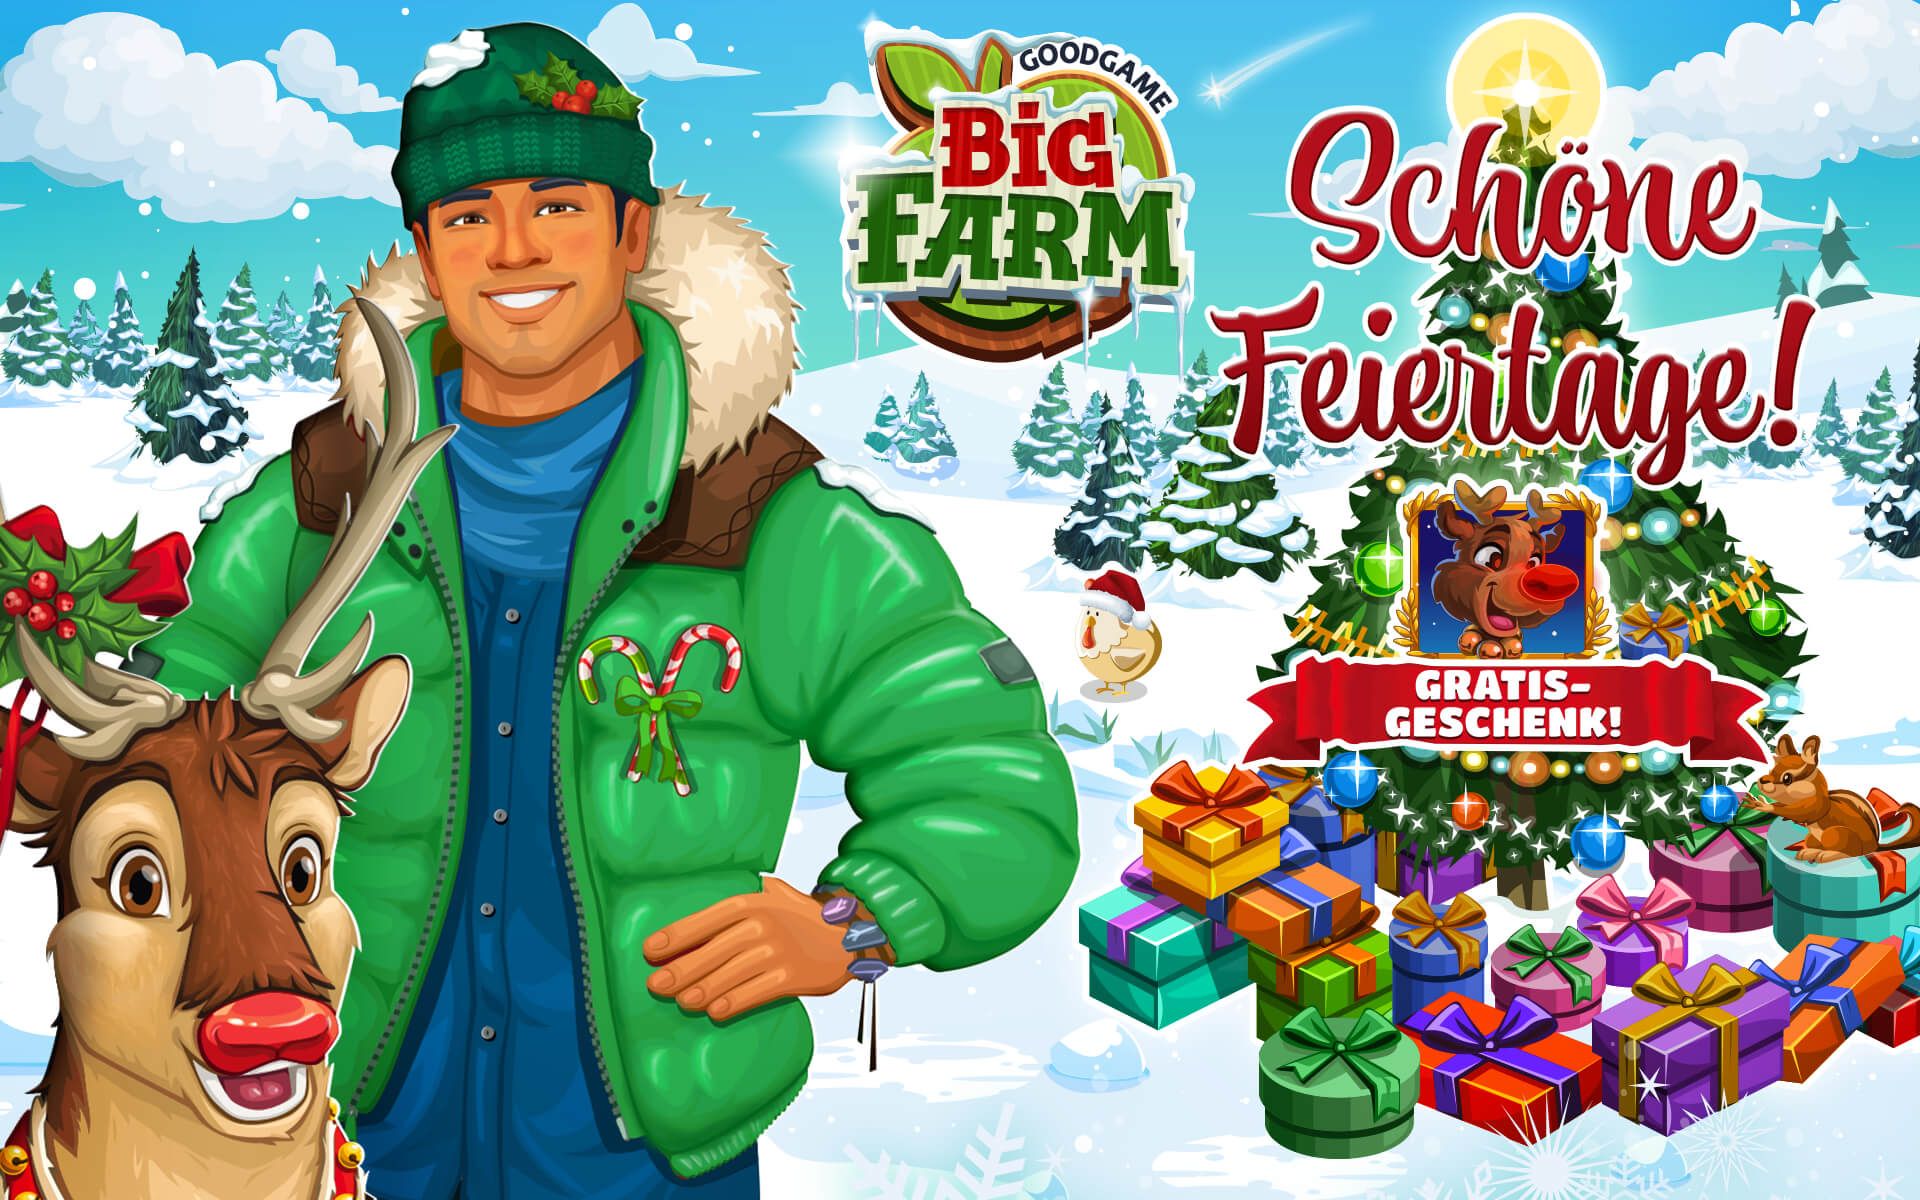 Goodgame Big Farm for ios instal free